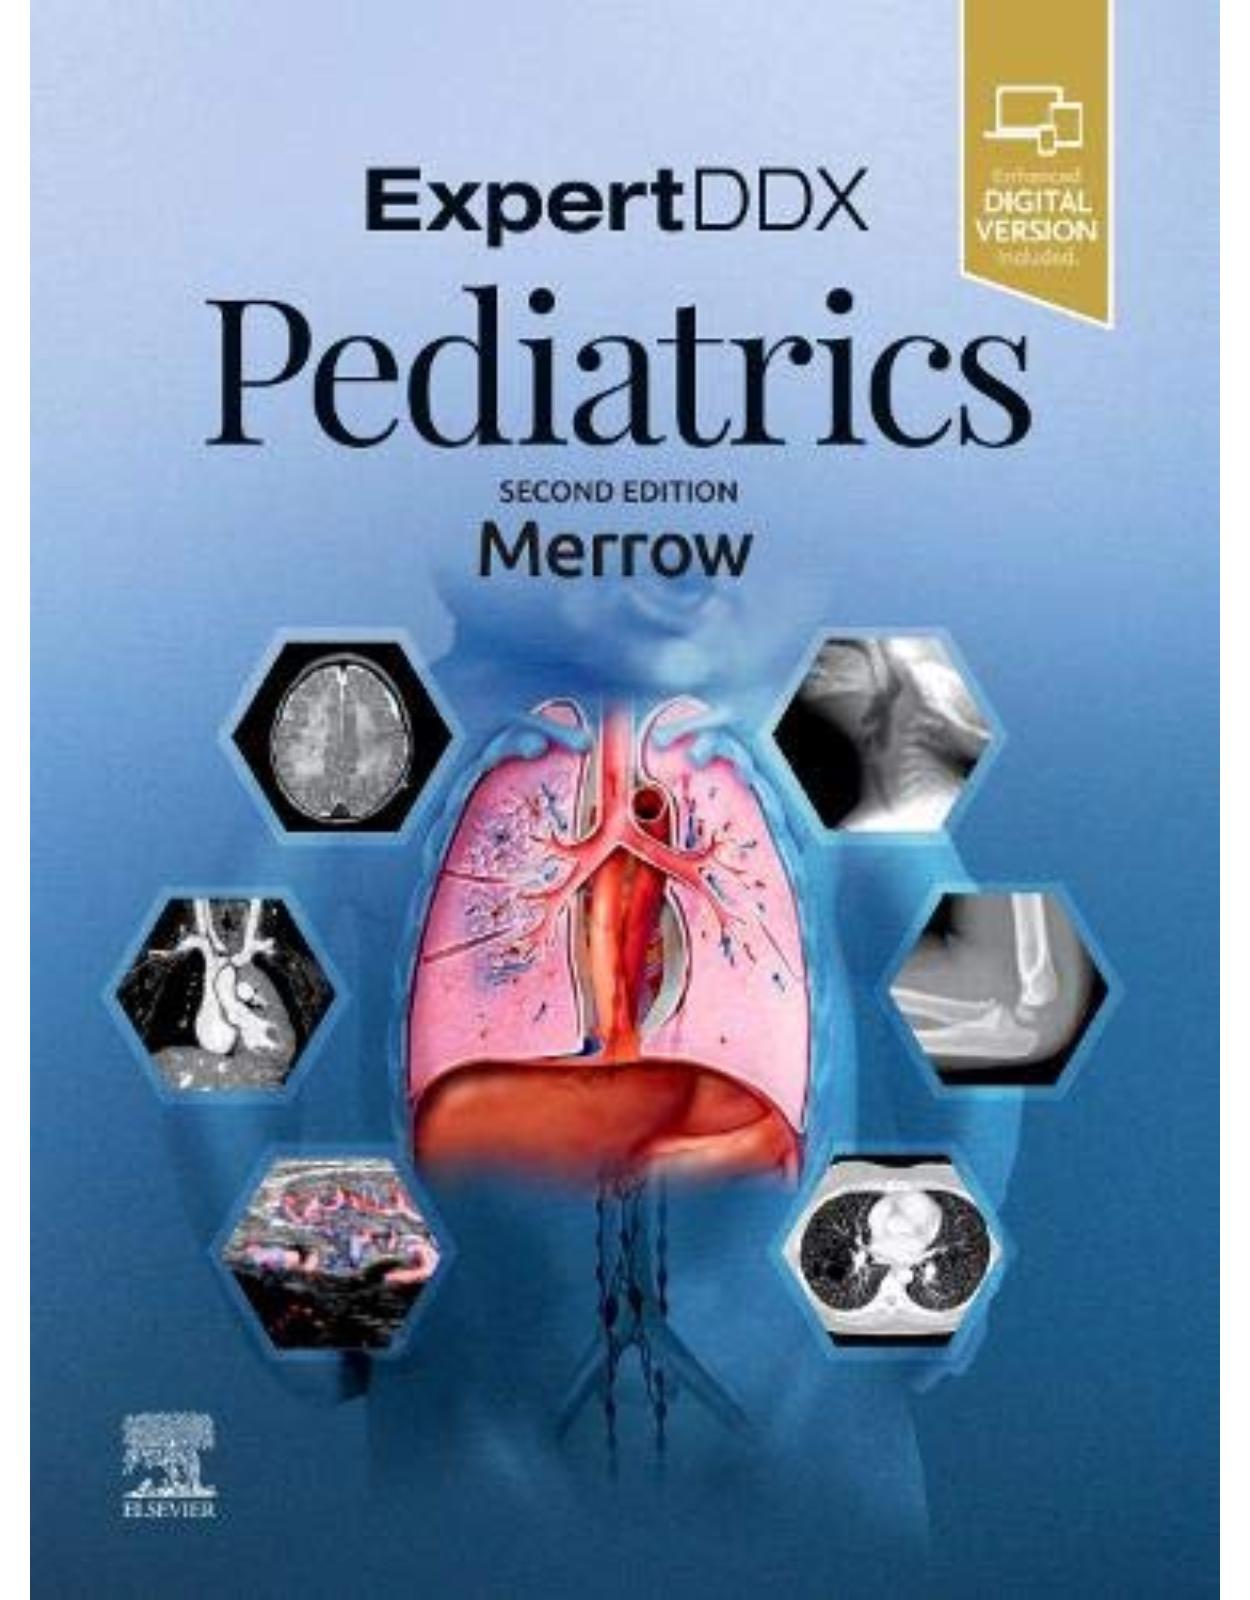 EXPERTddx: Pediatrics, 2nd Edition 